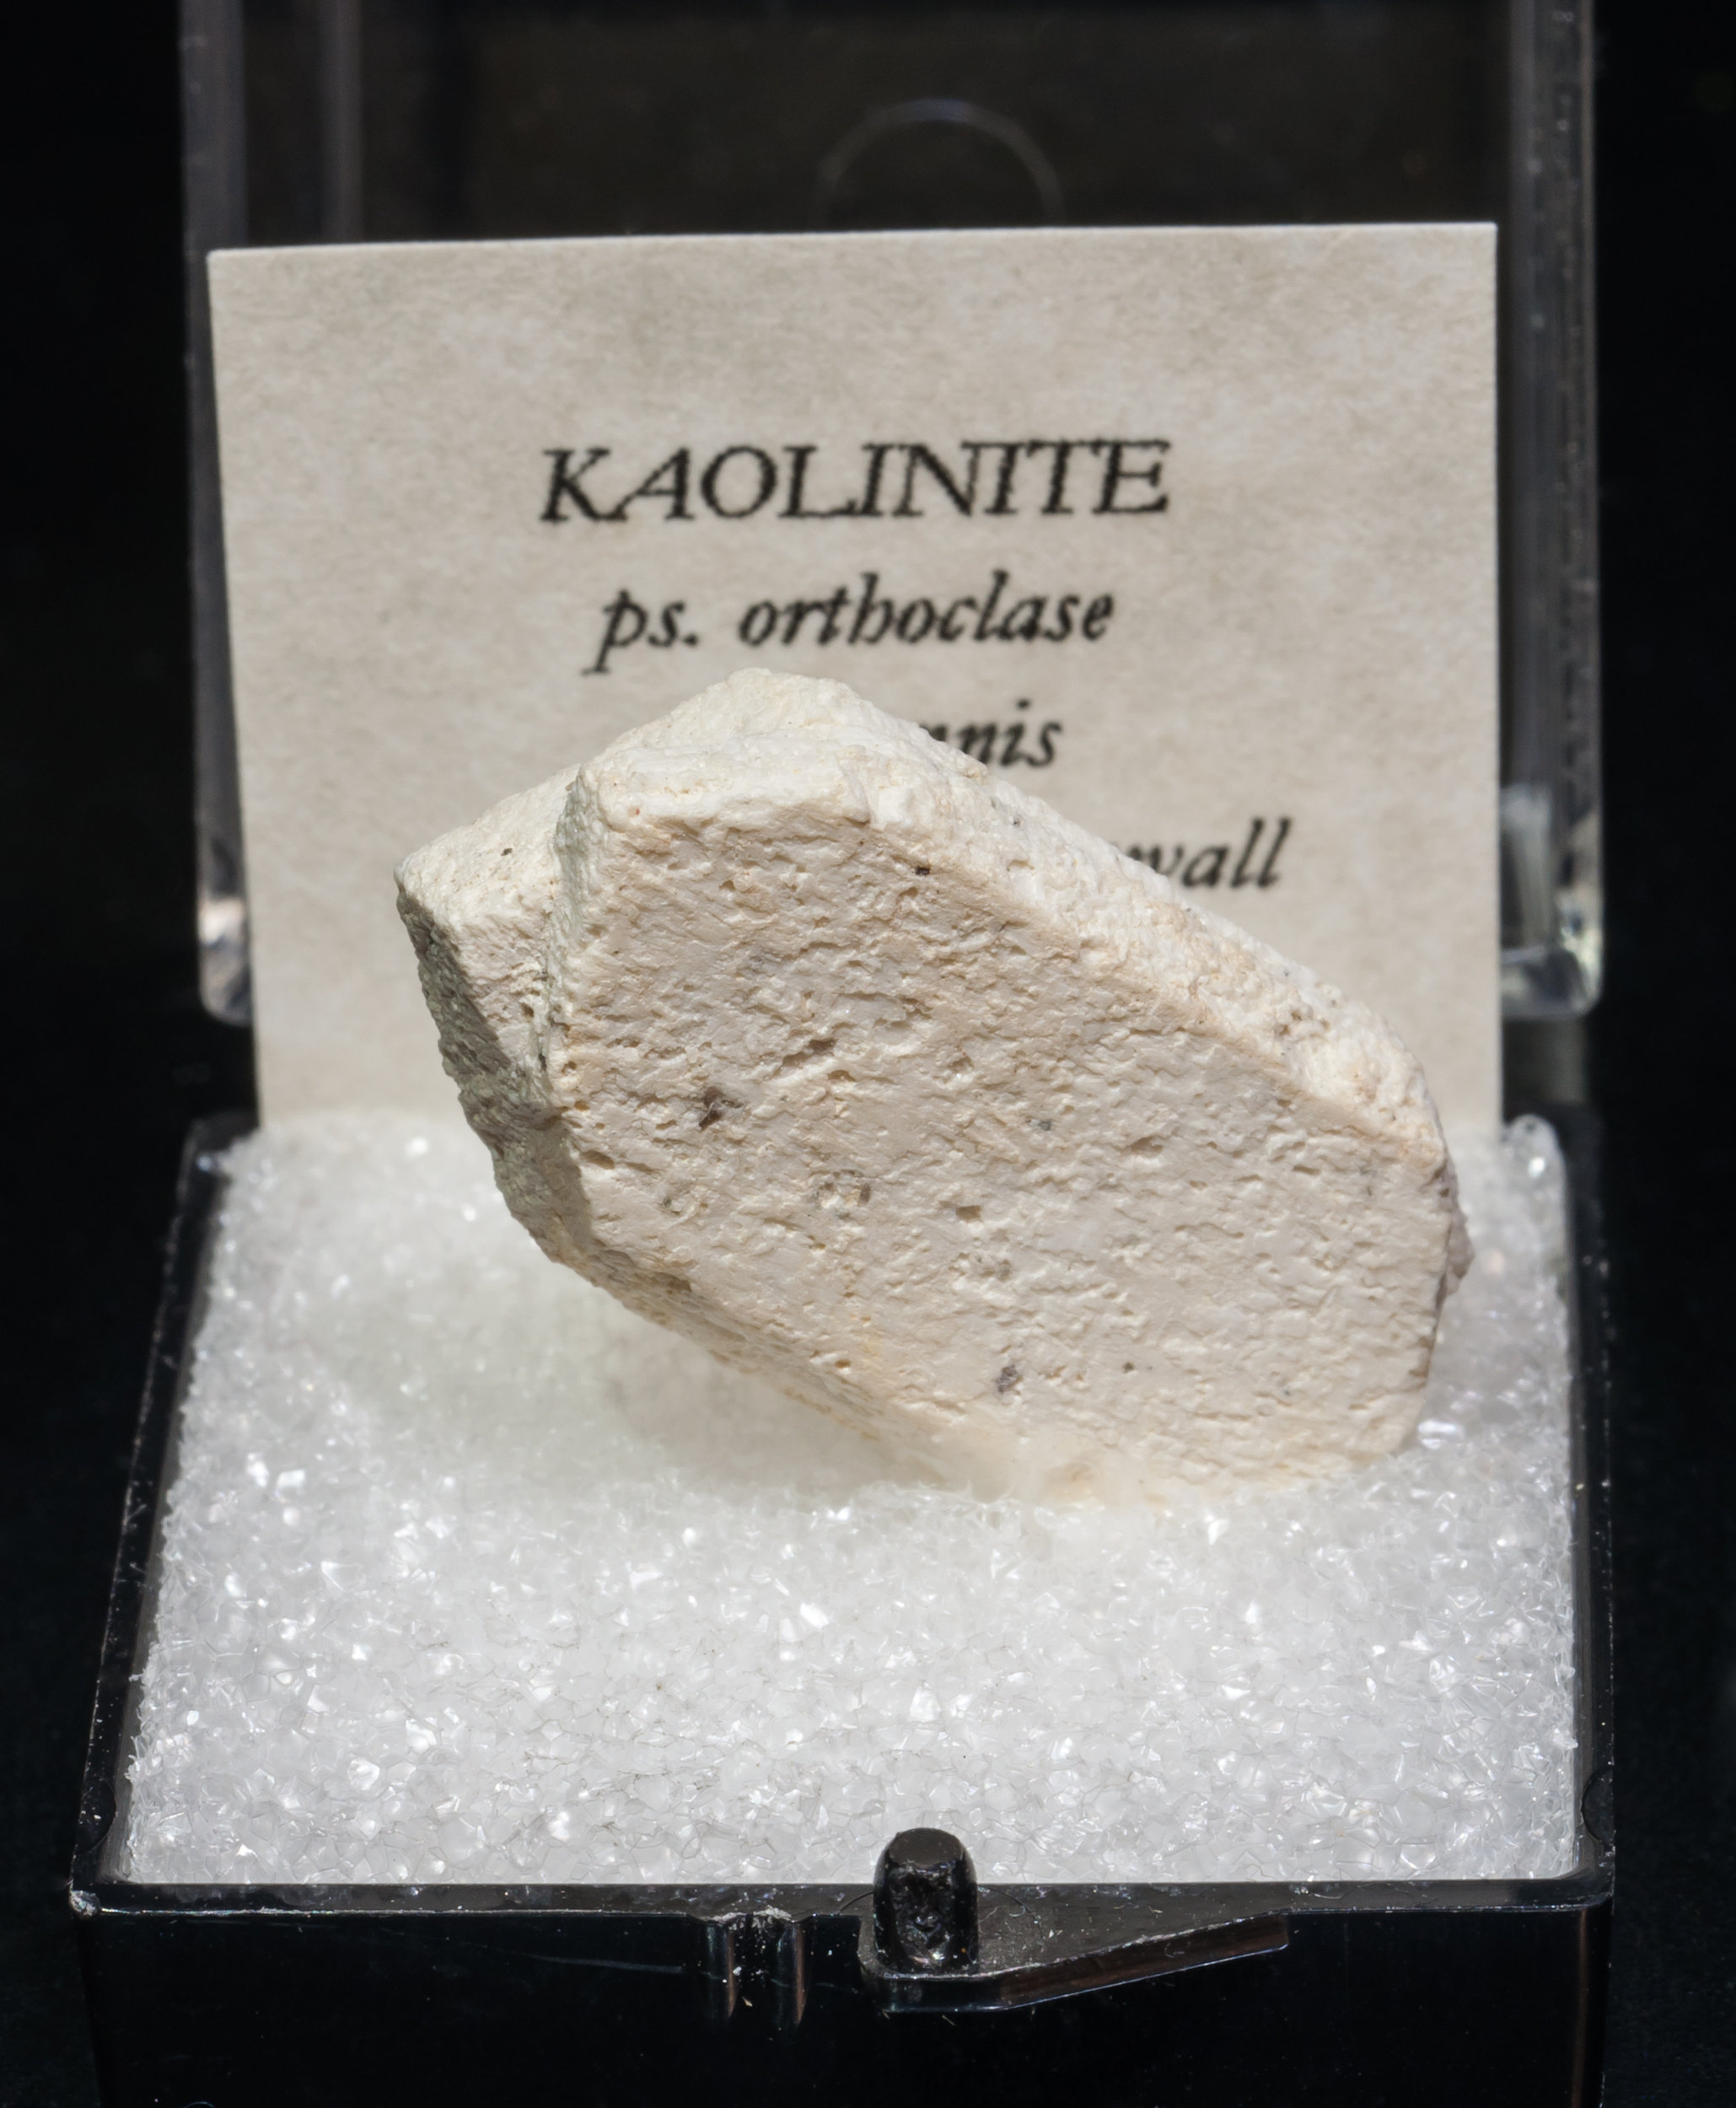 specimens/s_imagesAL3/Kaolinite-TG86AL3f1.jpg